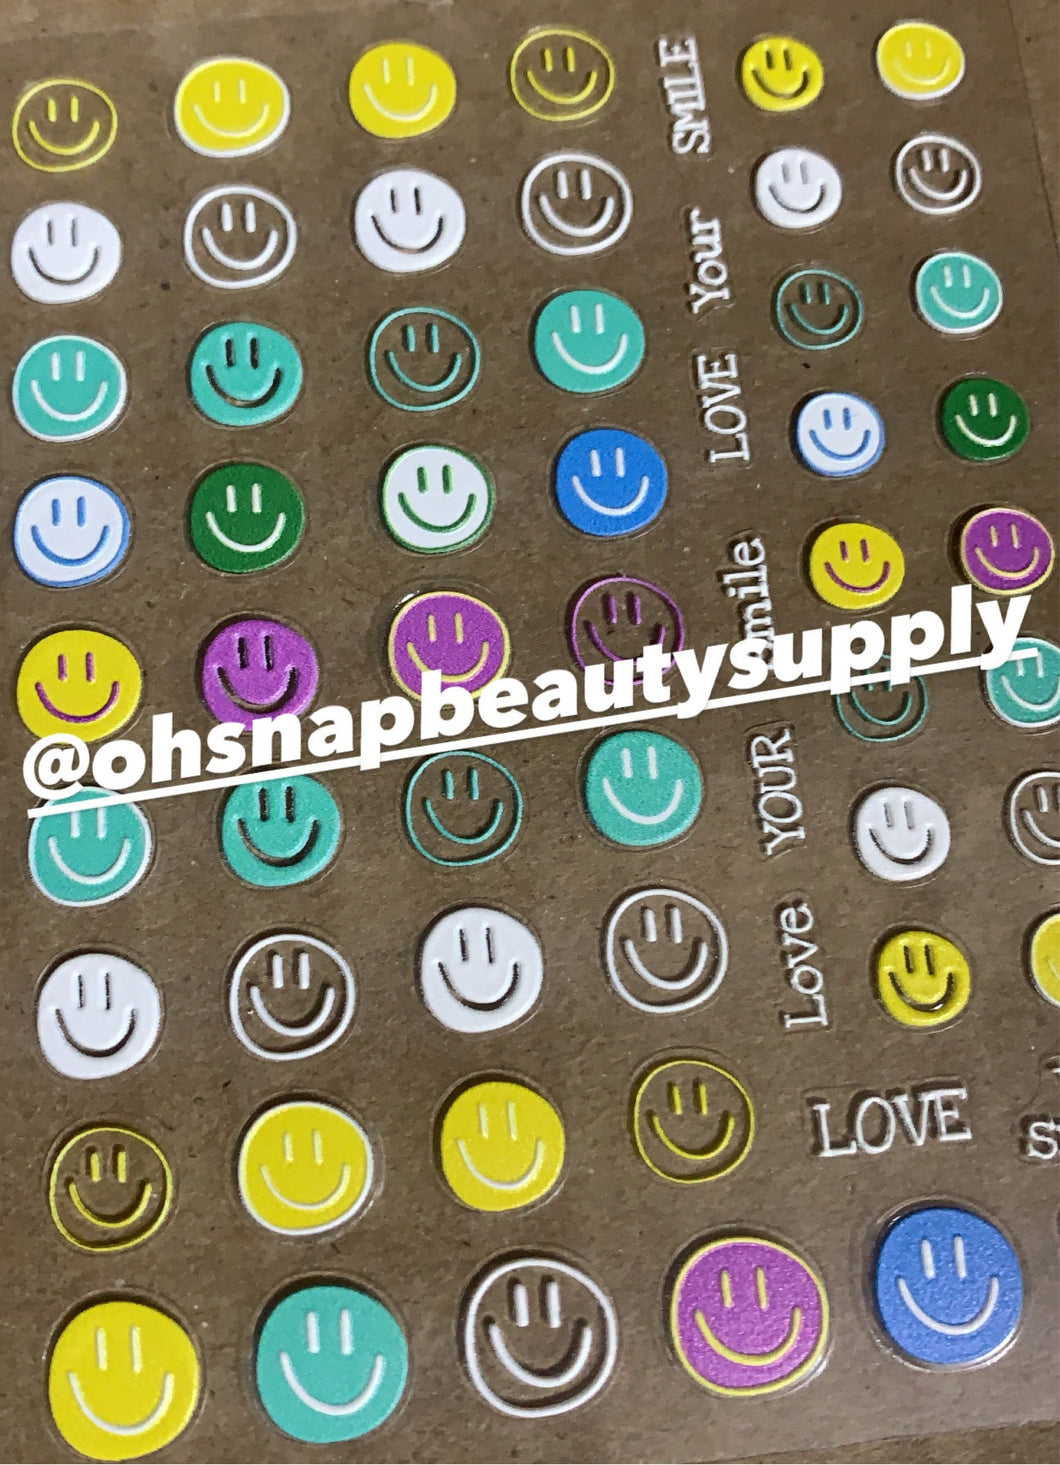 ***Smiley Face 391 Sticker